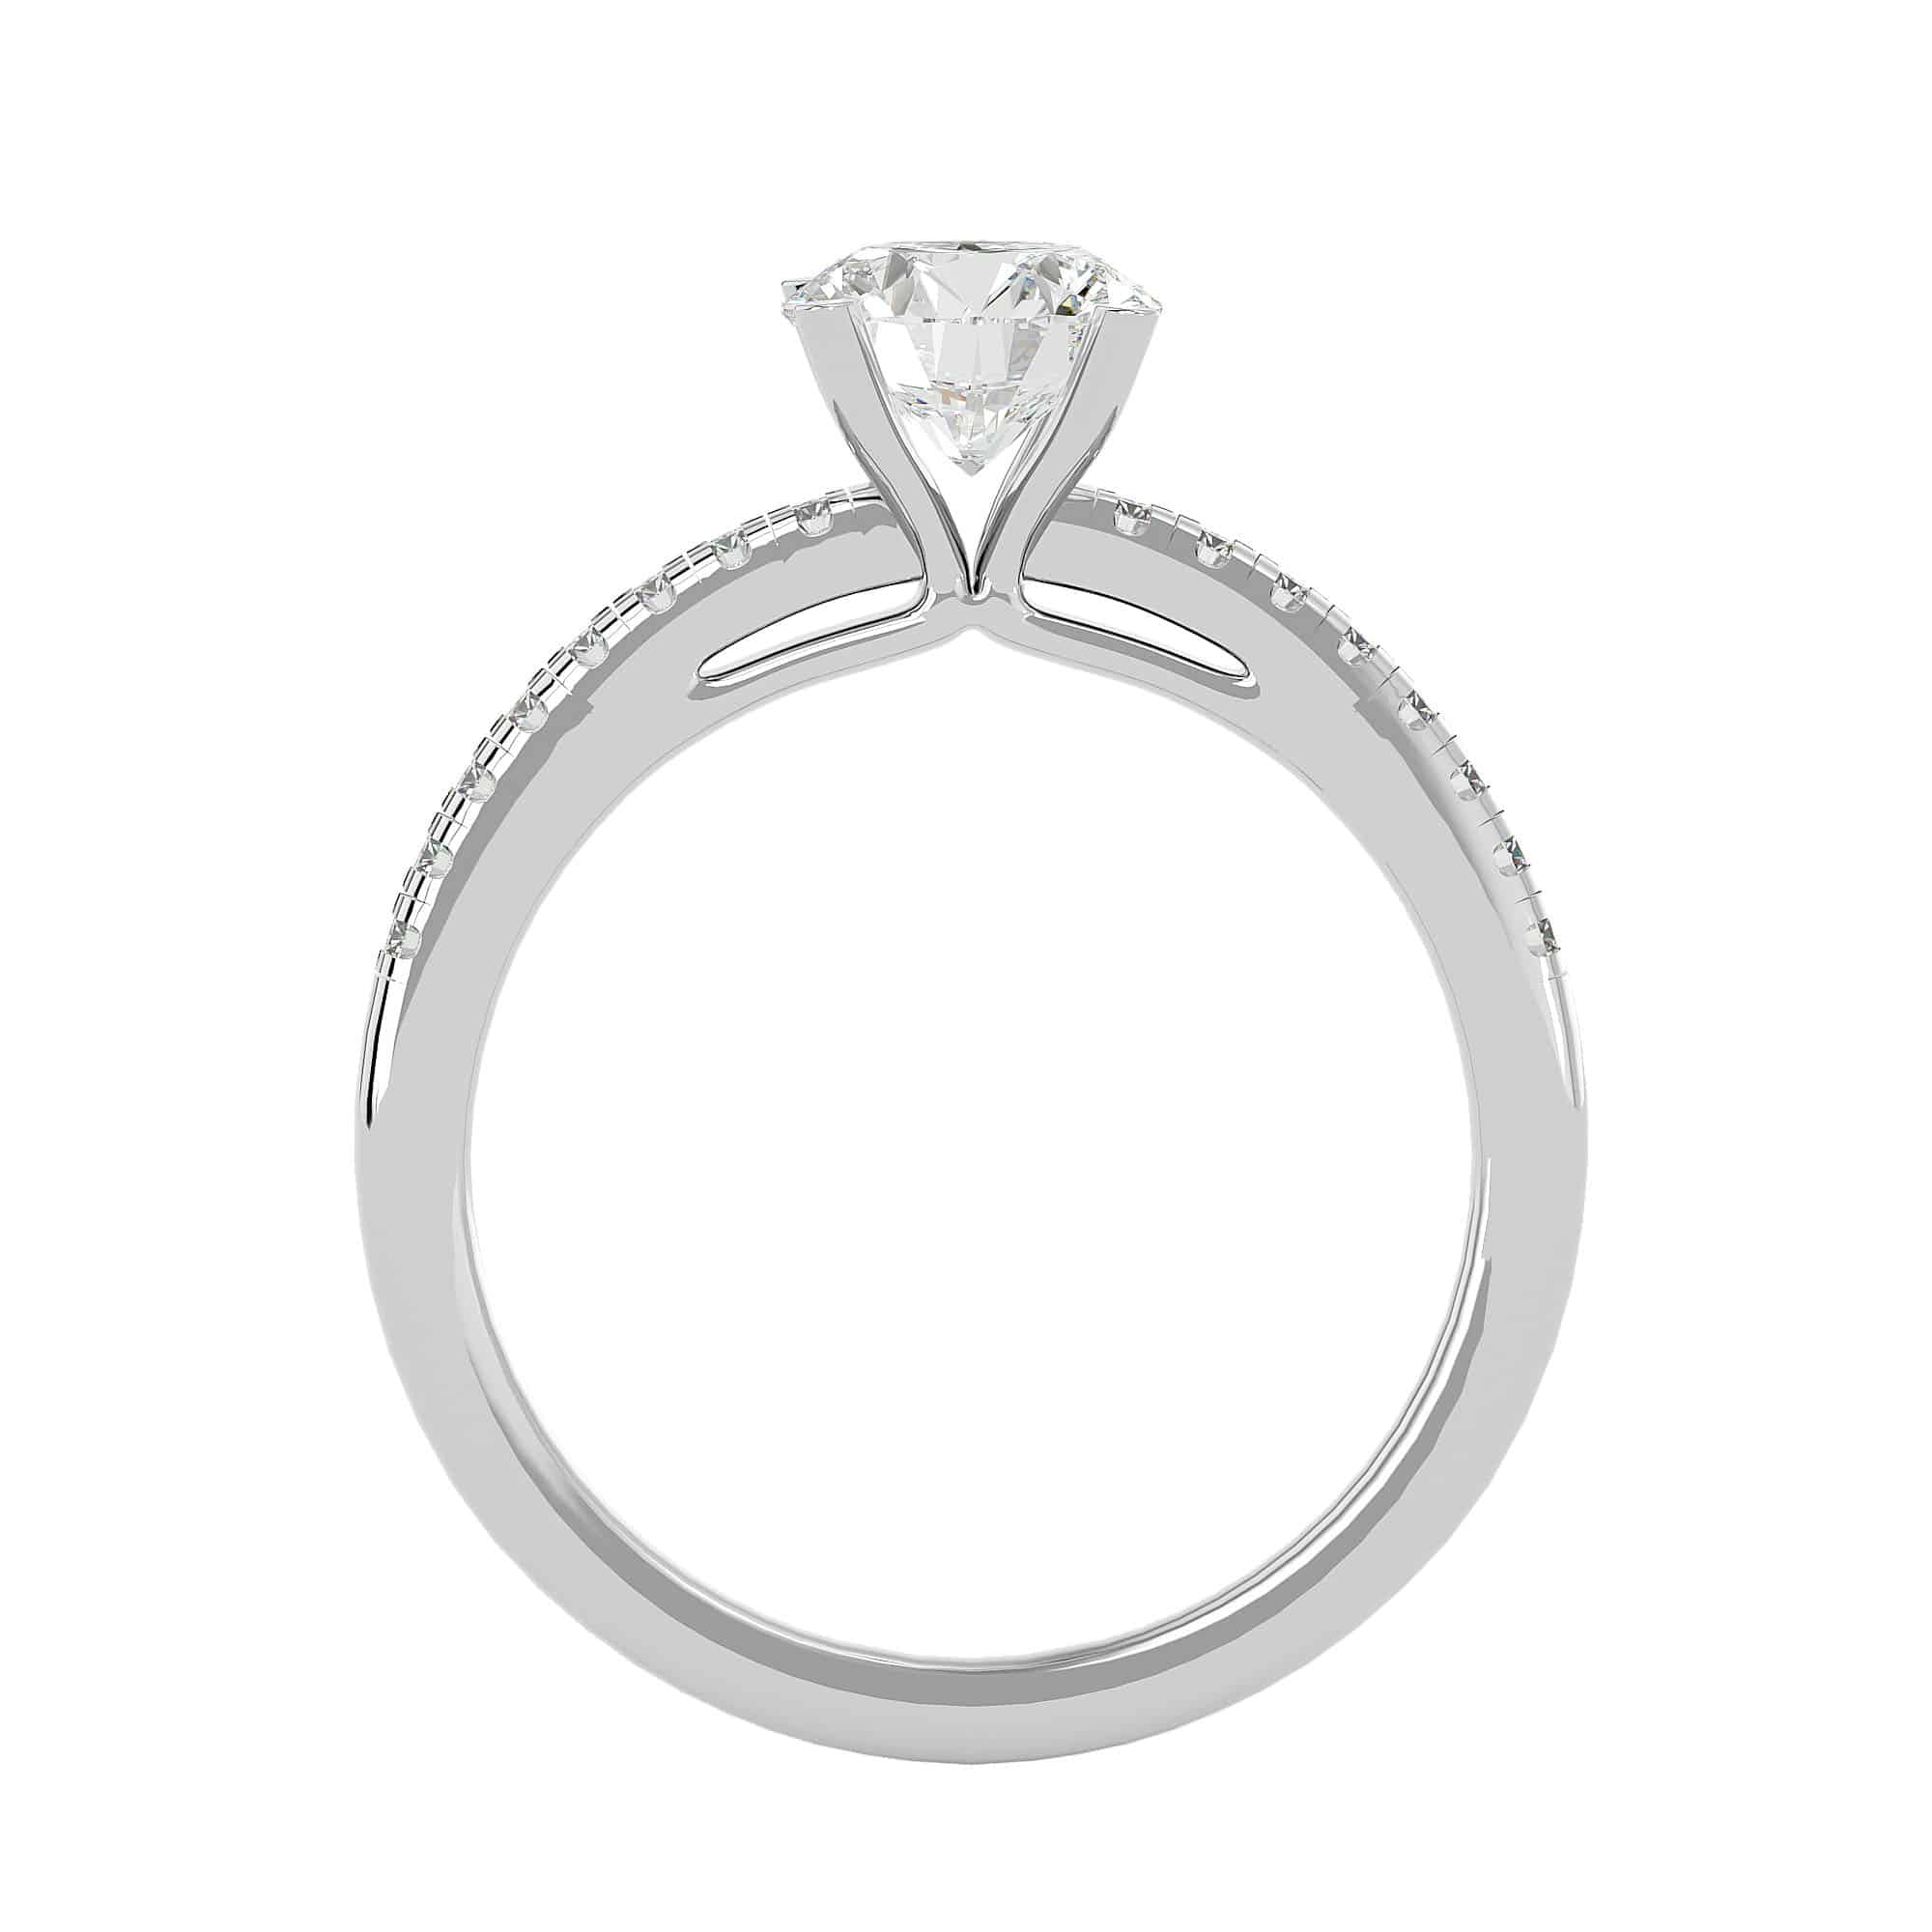 4 Prongs Pave Diamond Engagement Ring Setting